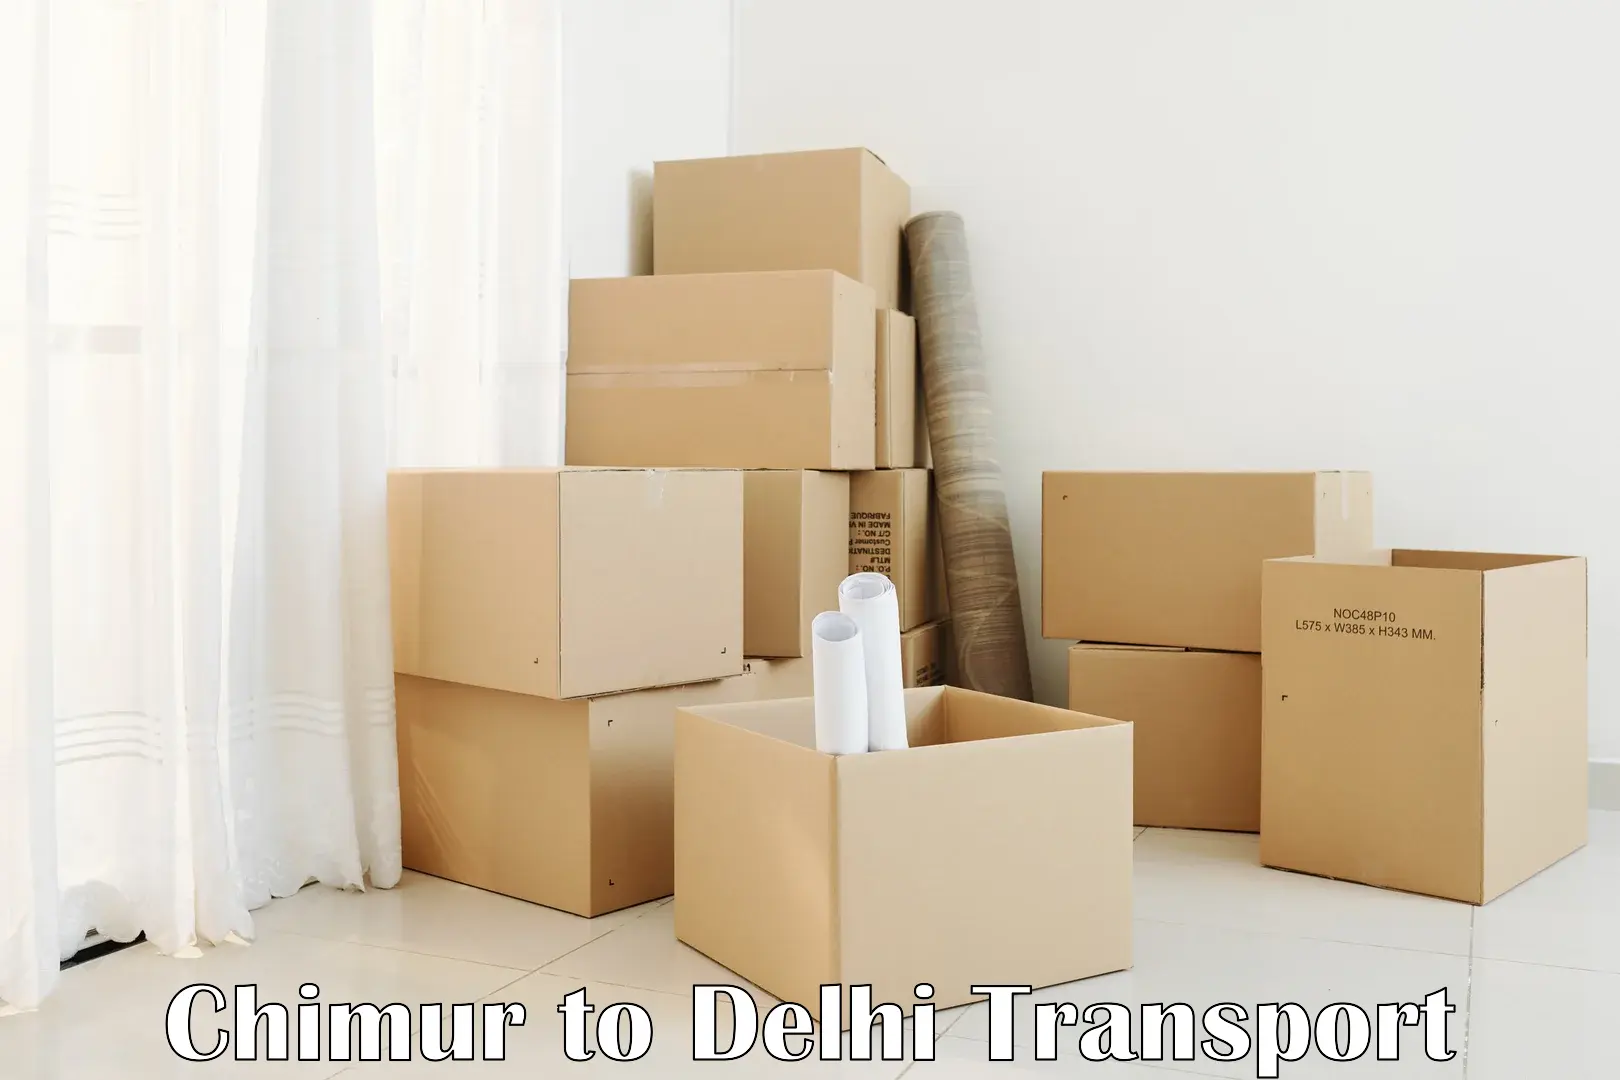 Daily transport service Chimur to Ashok Vihar